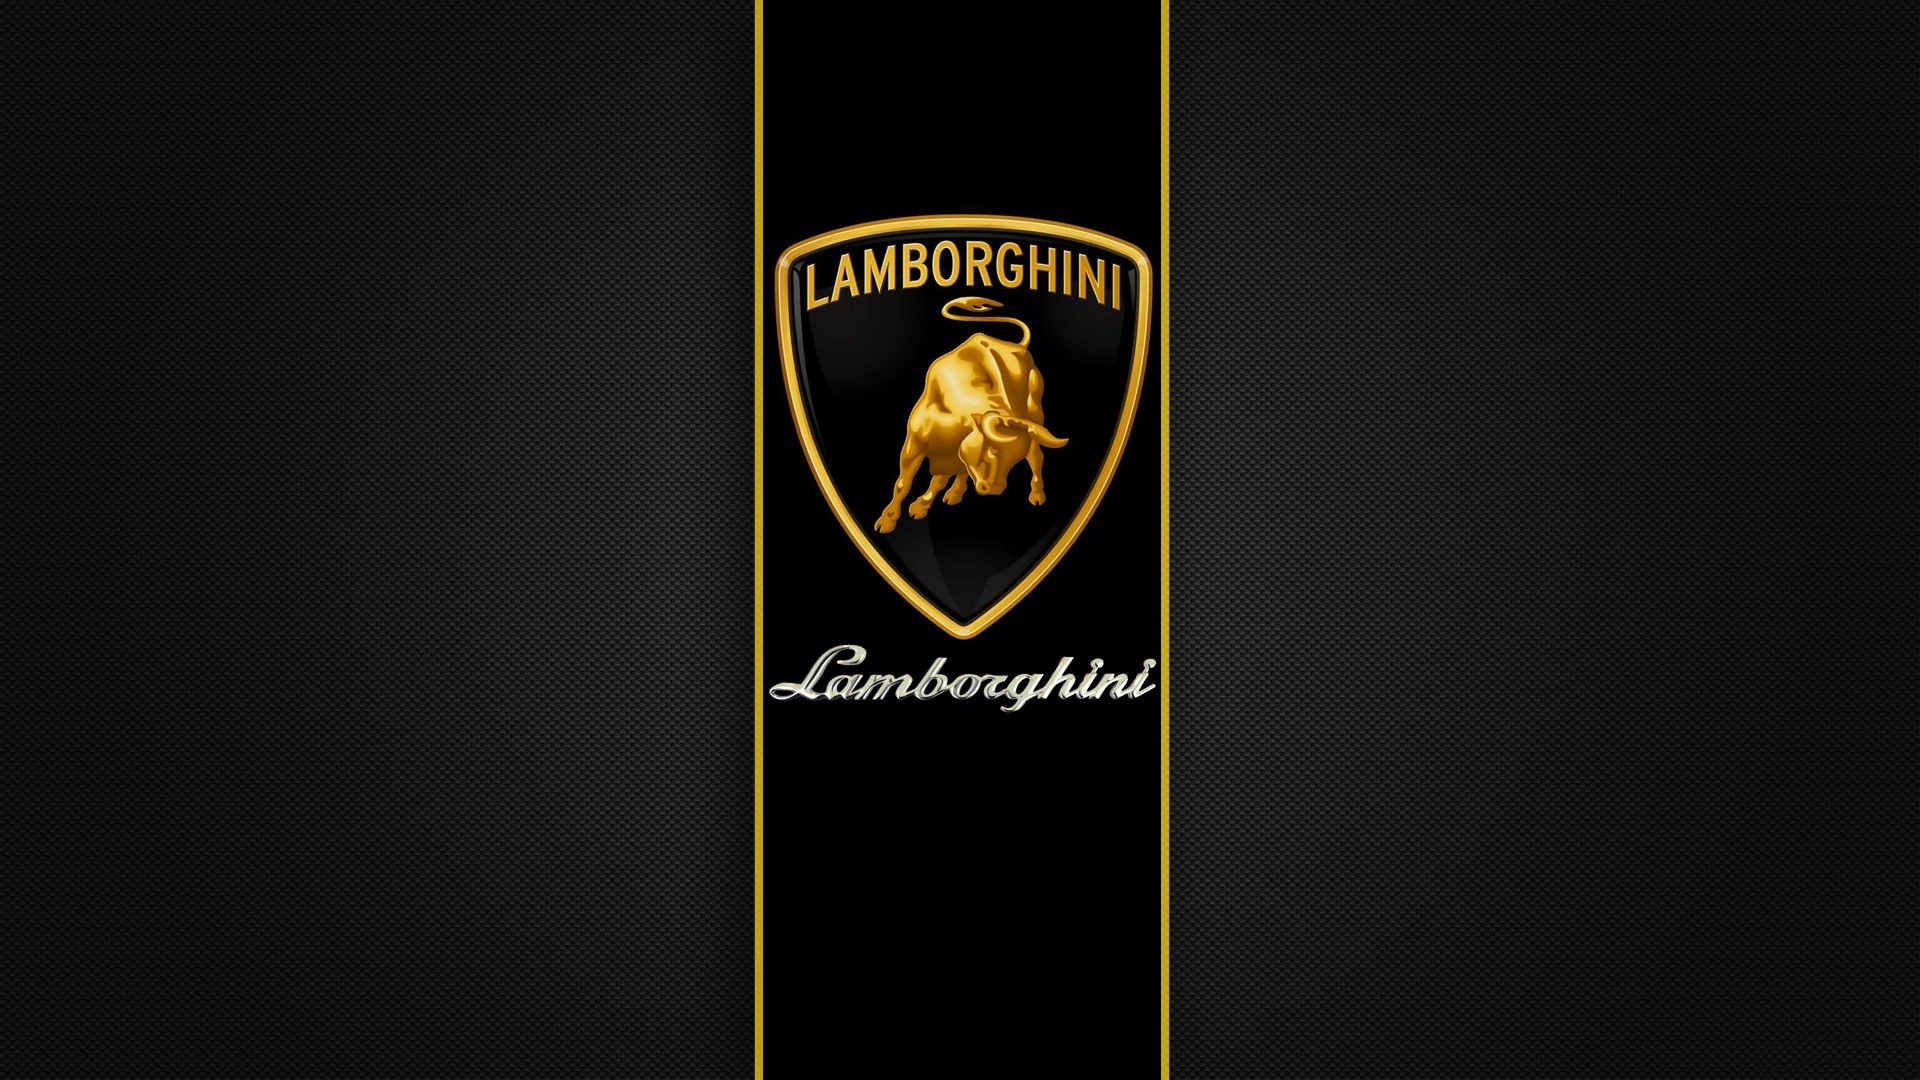 1920x1080 Full history of lamborghini logo. Full HD lamborghini logo wallpapers and  meanings of manufacturers emblems.